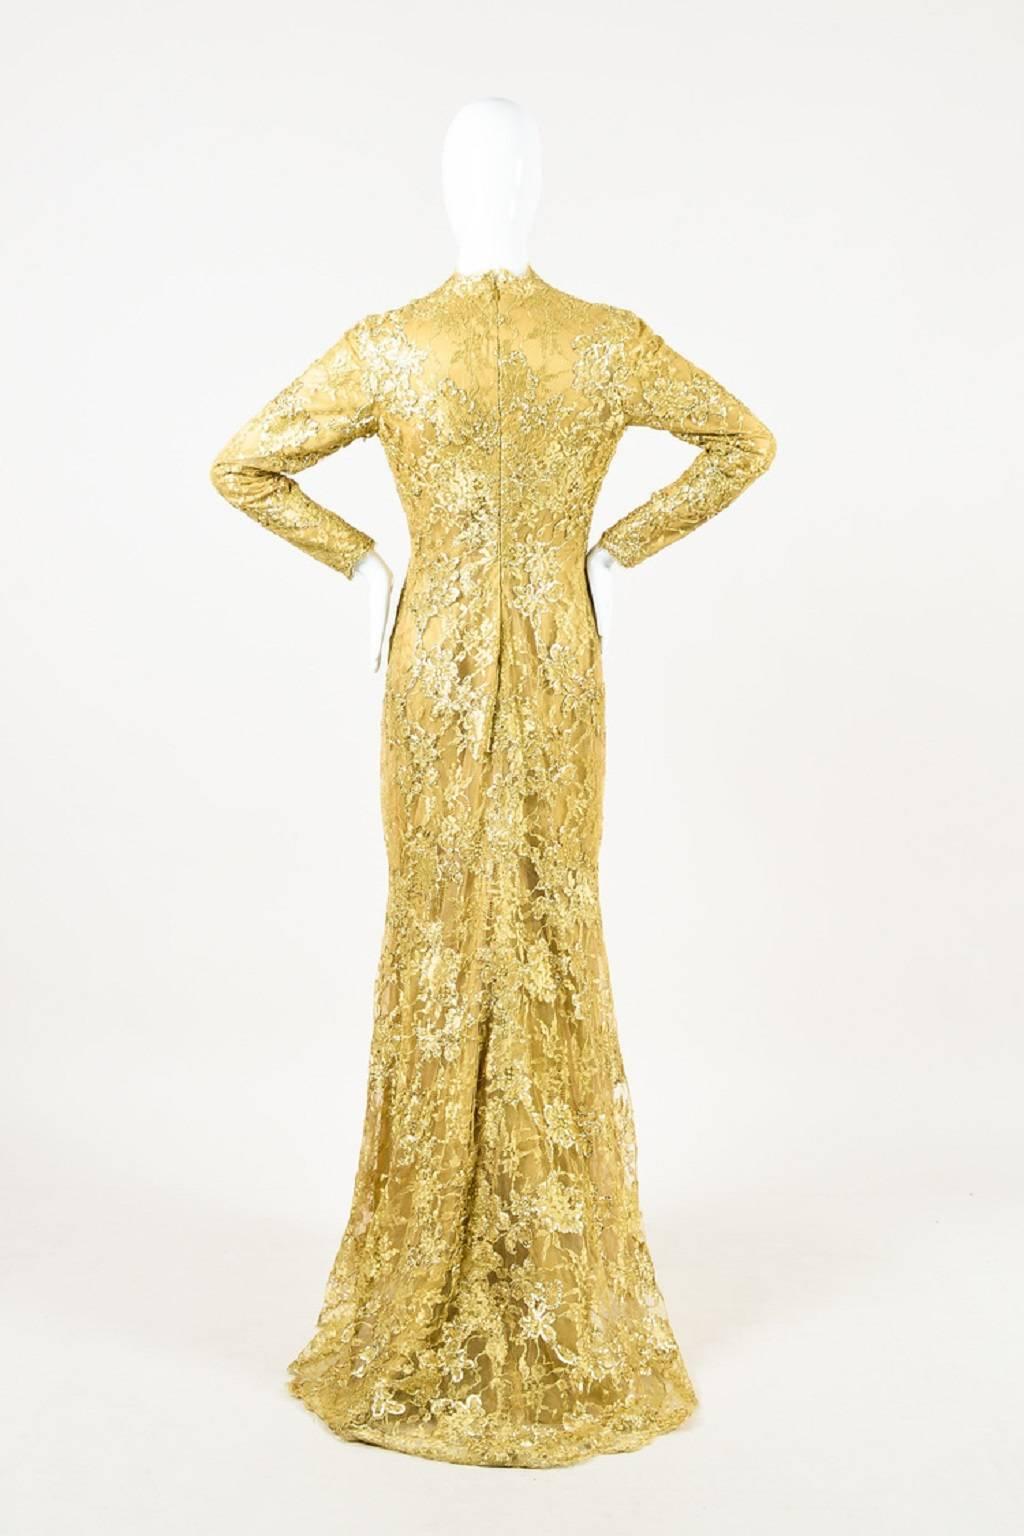 metallic gold gown